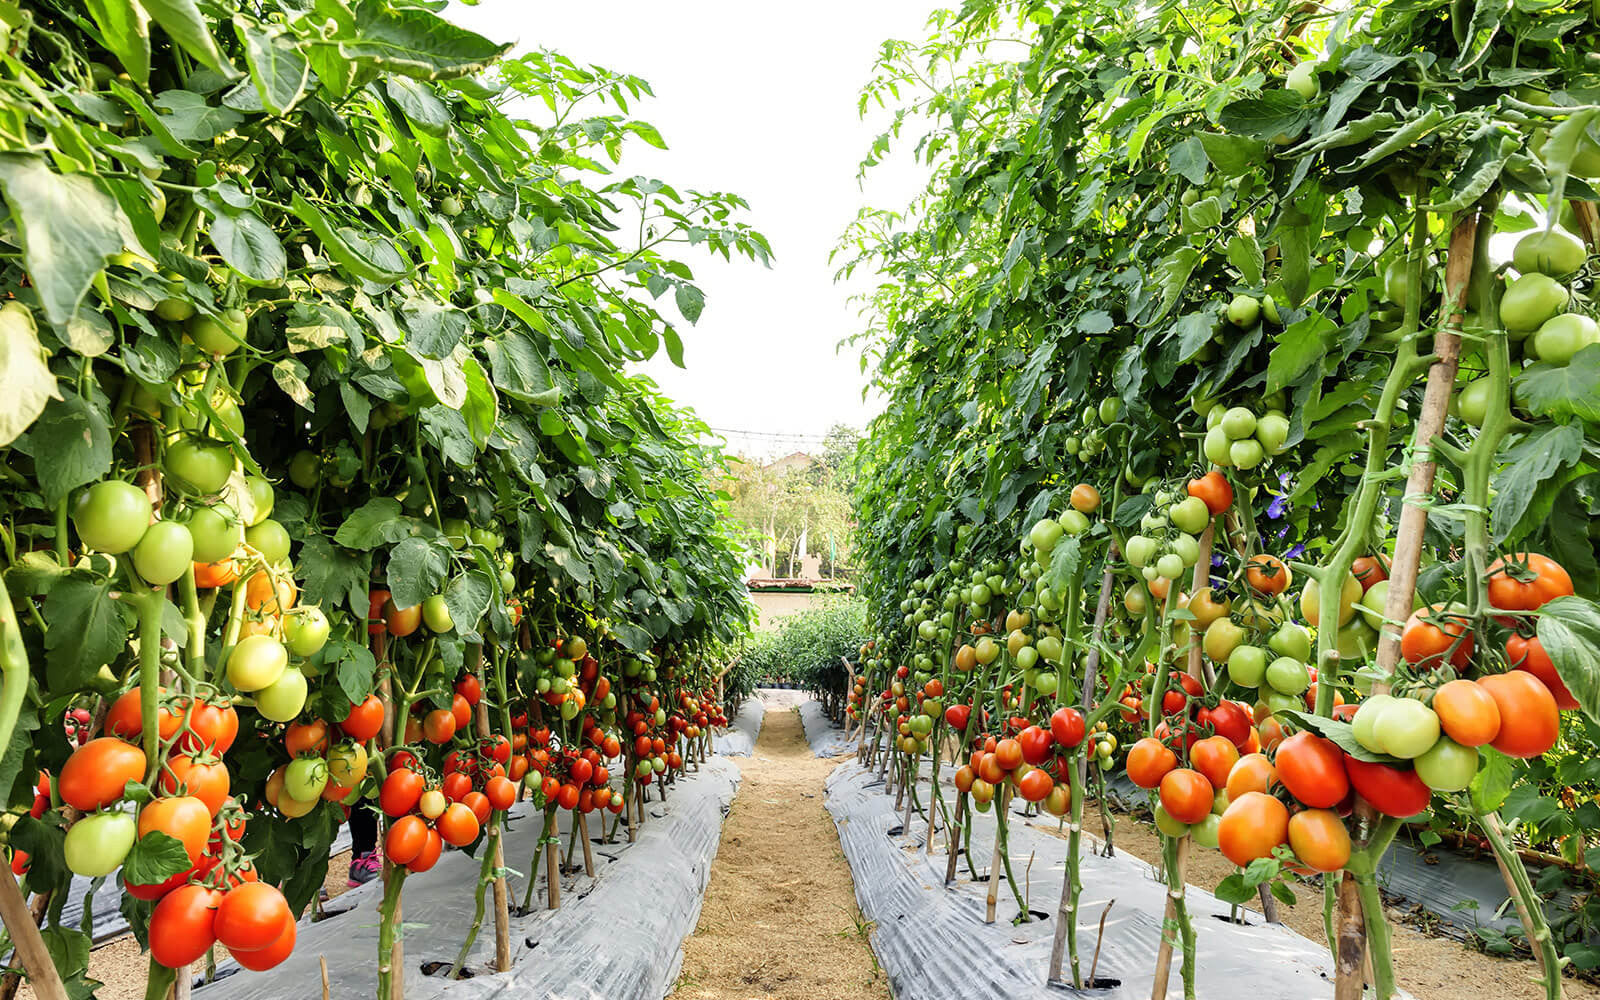 Tomatoes grown in an organic farmhouse